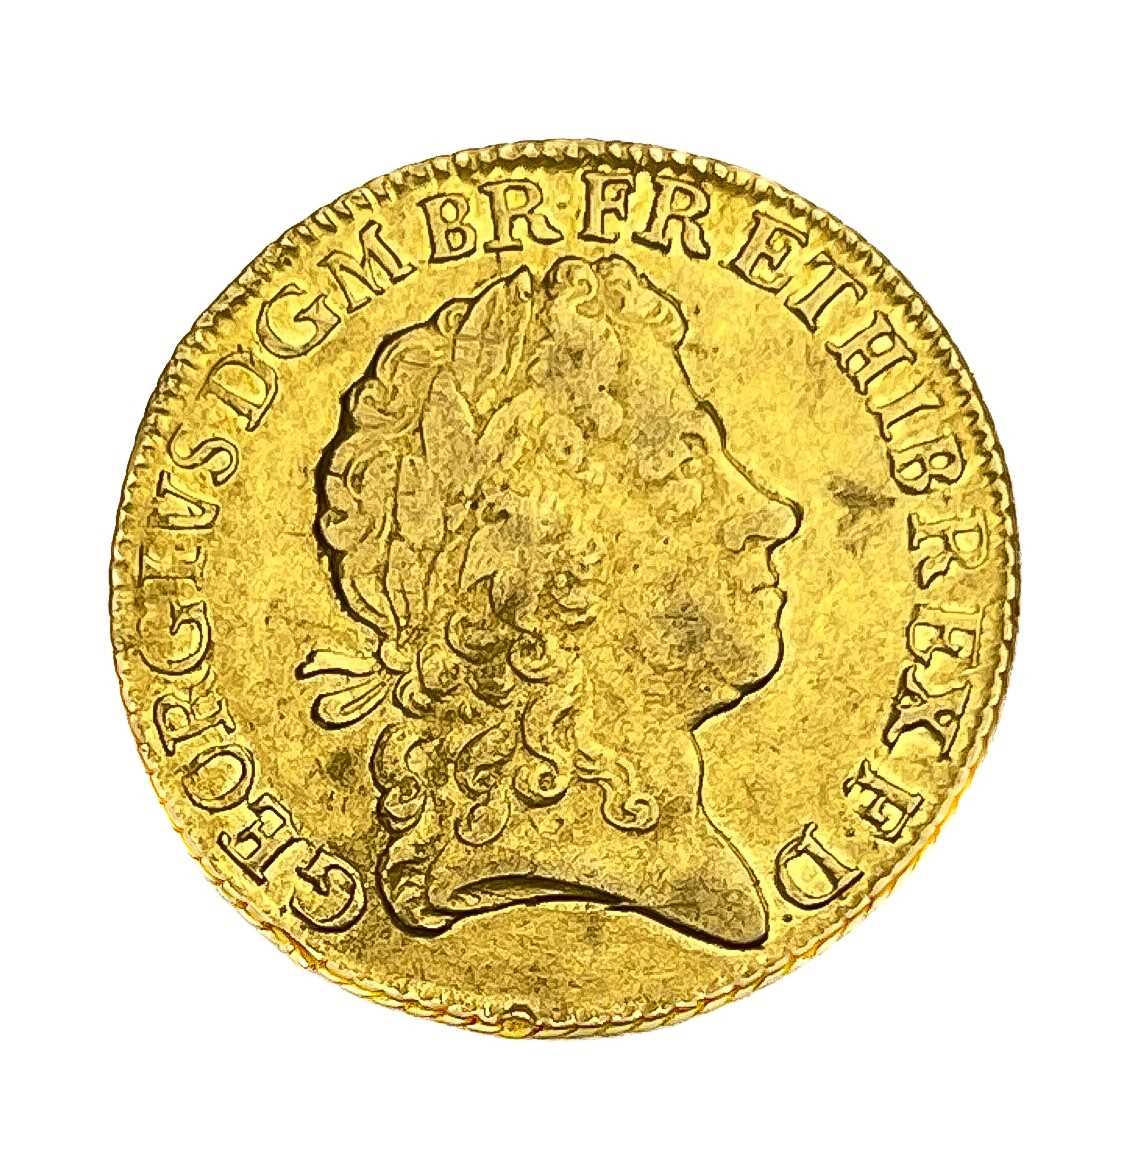 Guinea, George I, 1722, Fourth Bust. S.3631